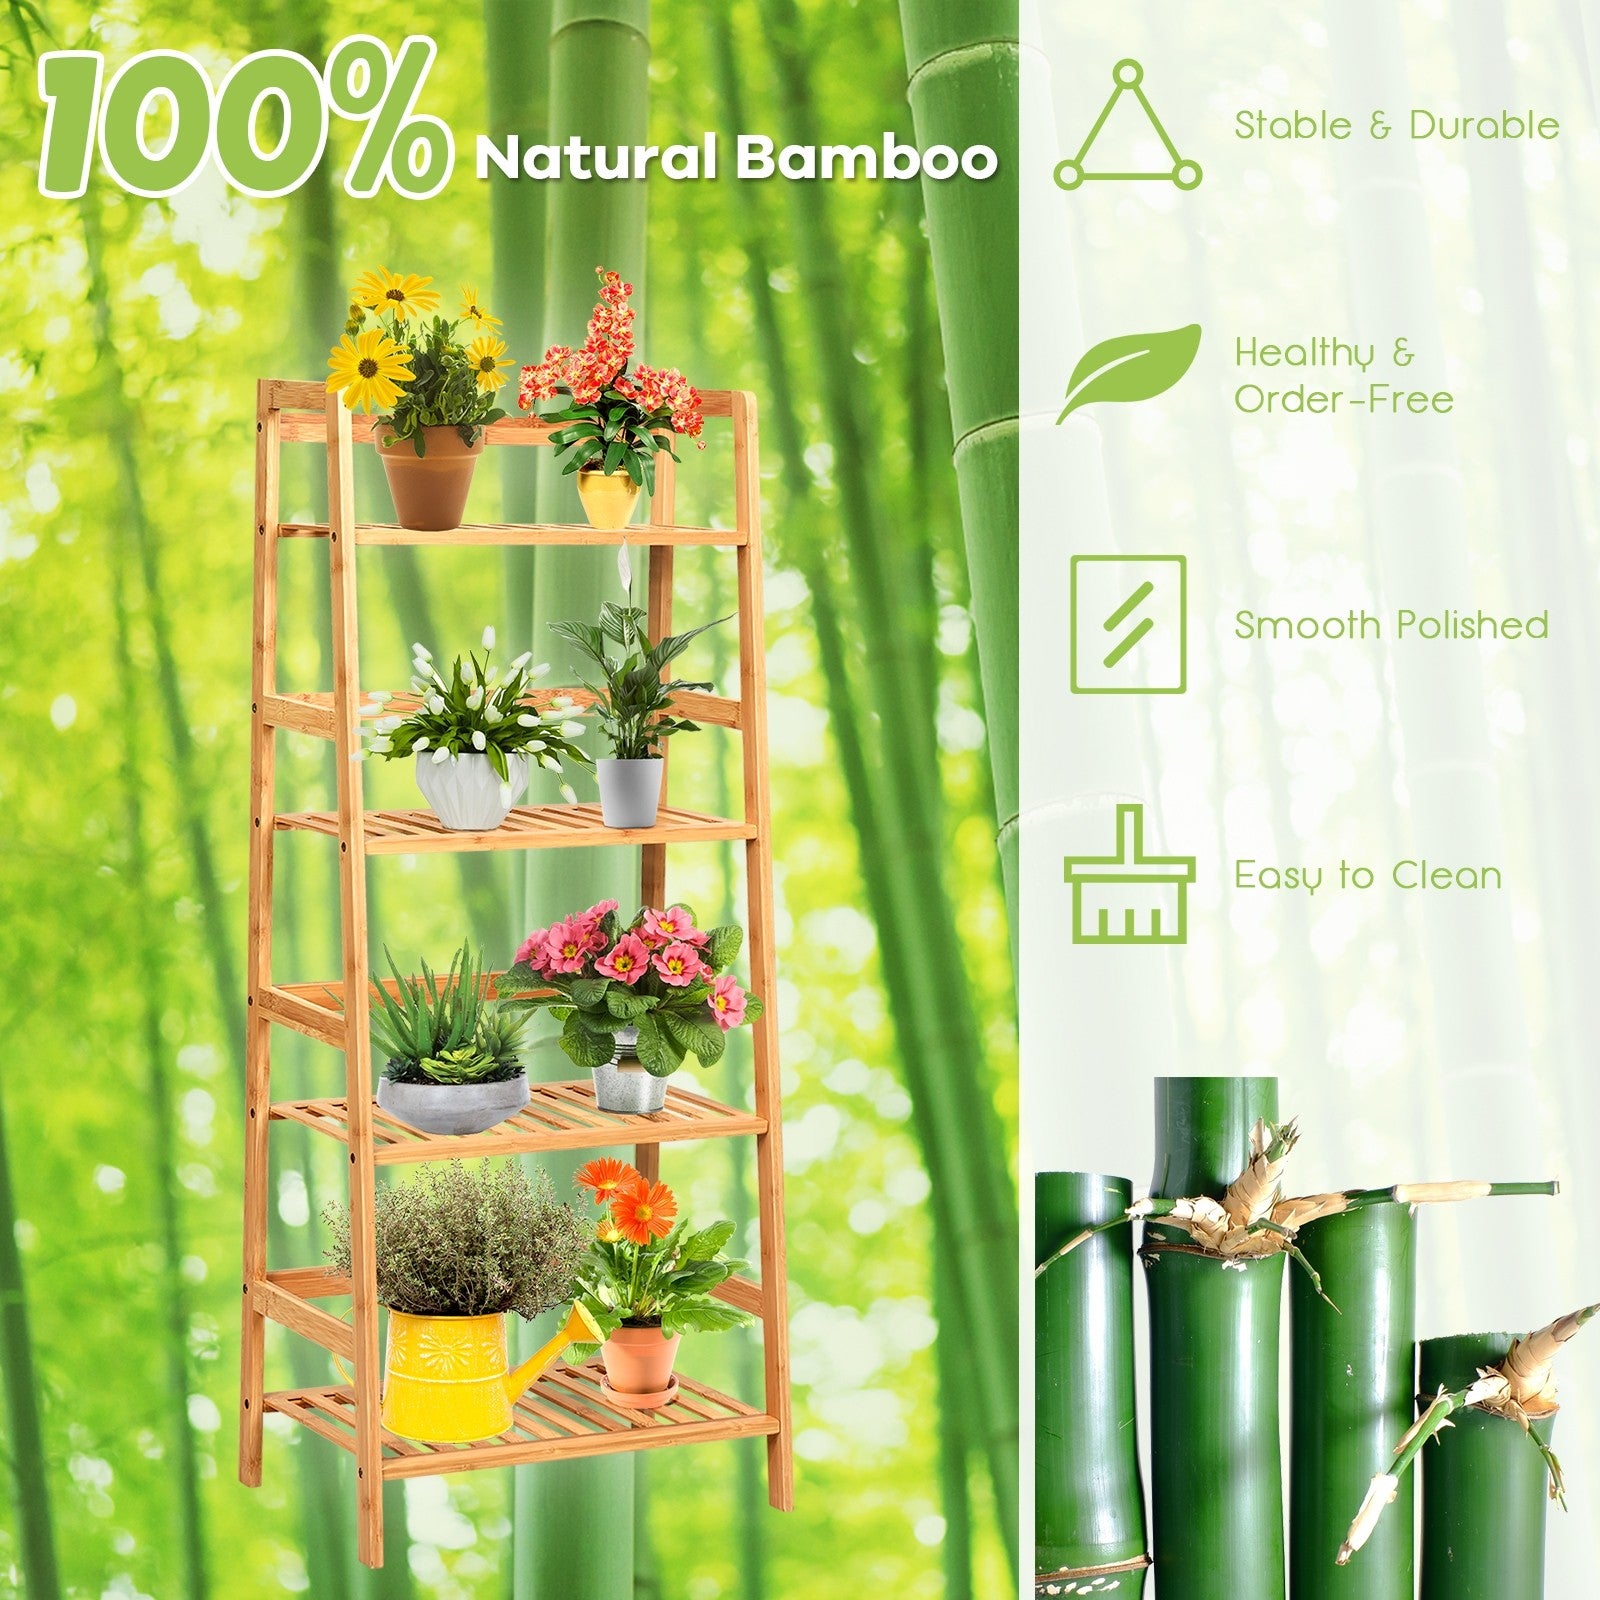 4-Tier Ladder Shelf Plant Stand, Bamboo Flower Pots Holder Display Rack - Giantexus